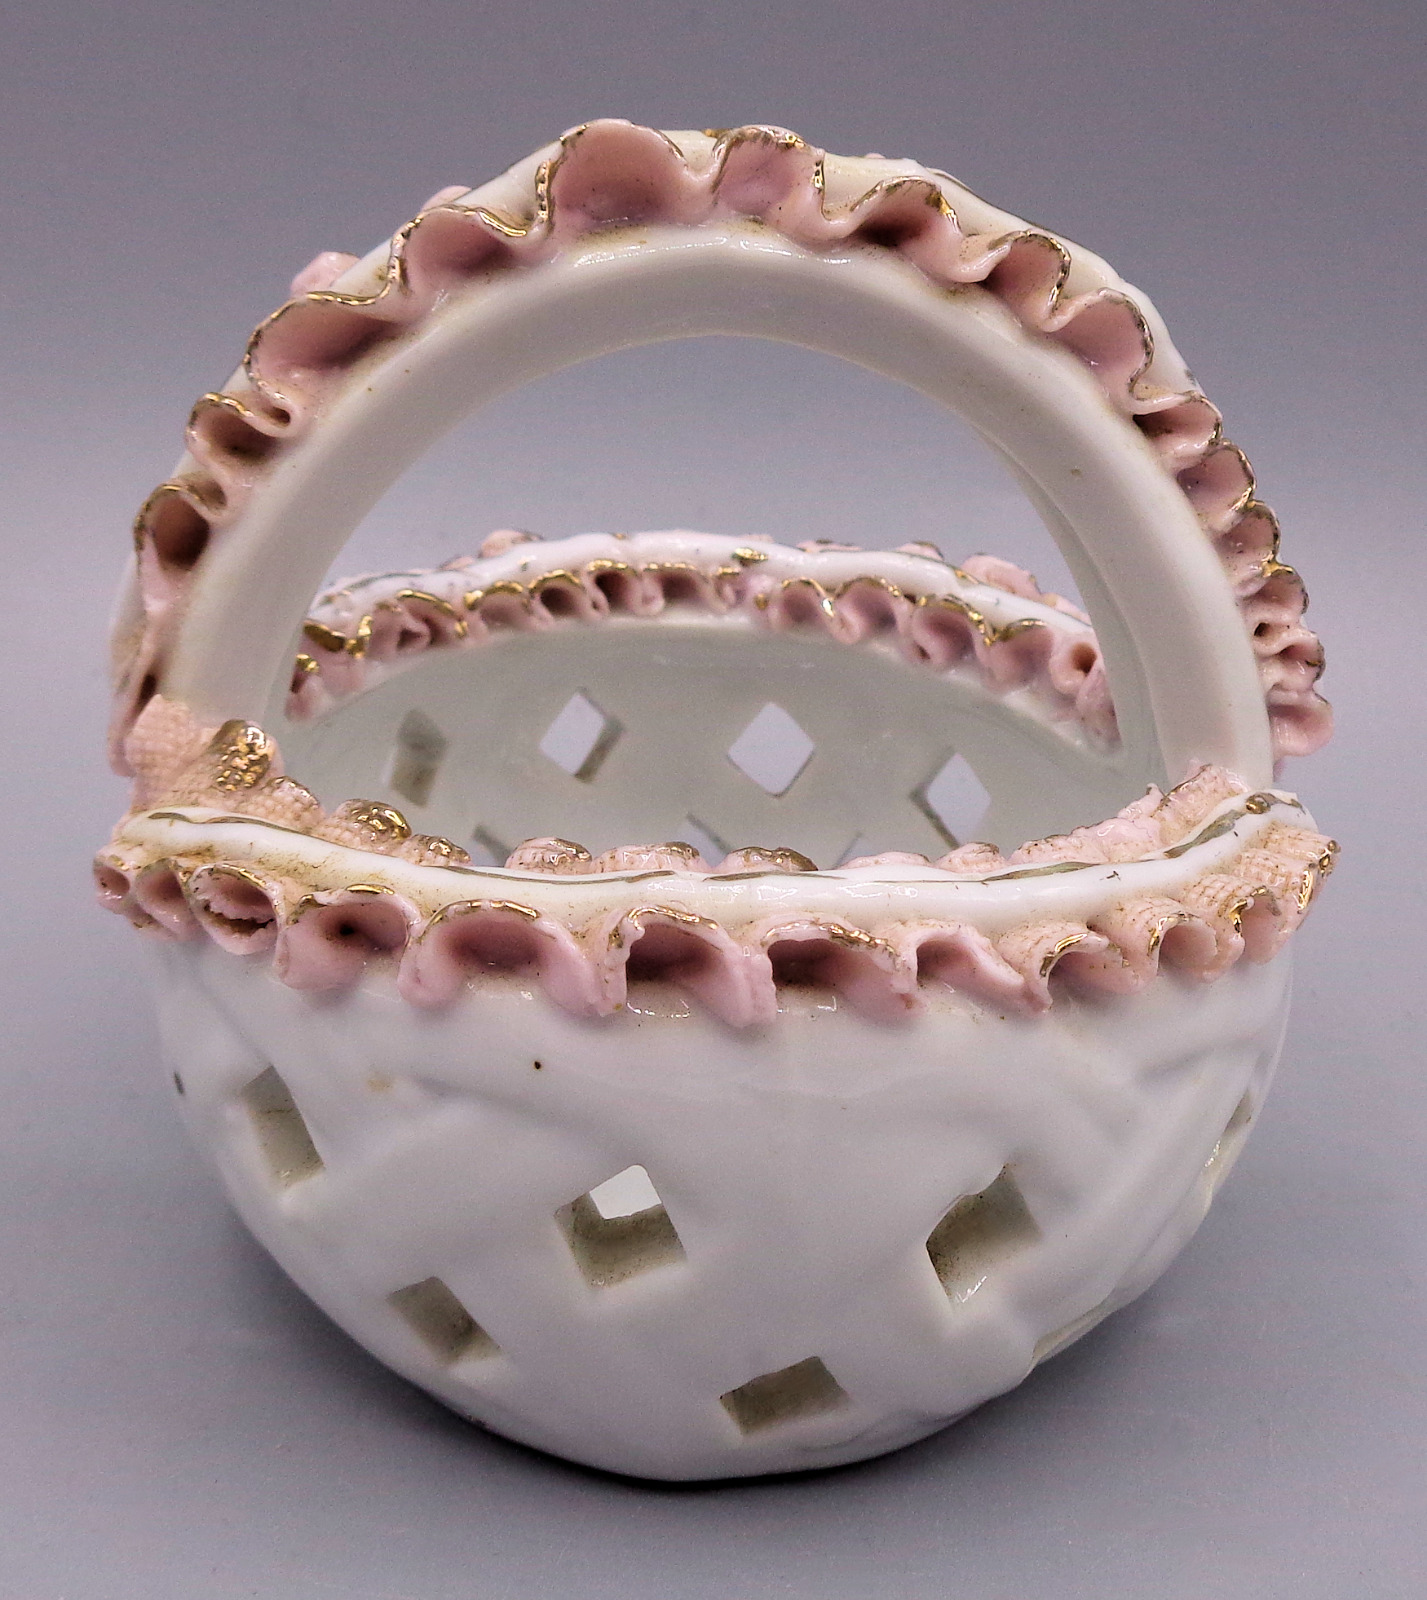 Vintage Porcelain Basket Bowl Trinket Dish Miniature White Pink Lace Tray